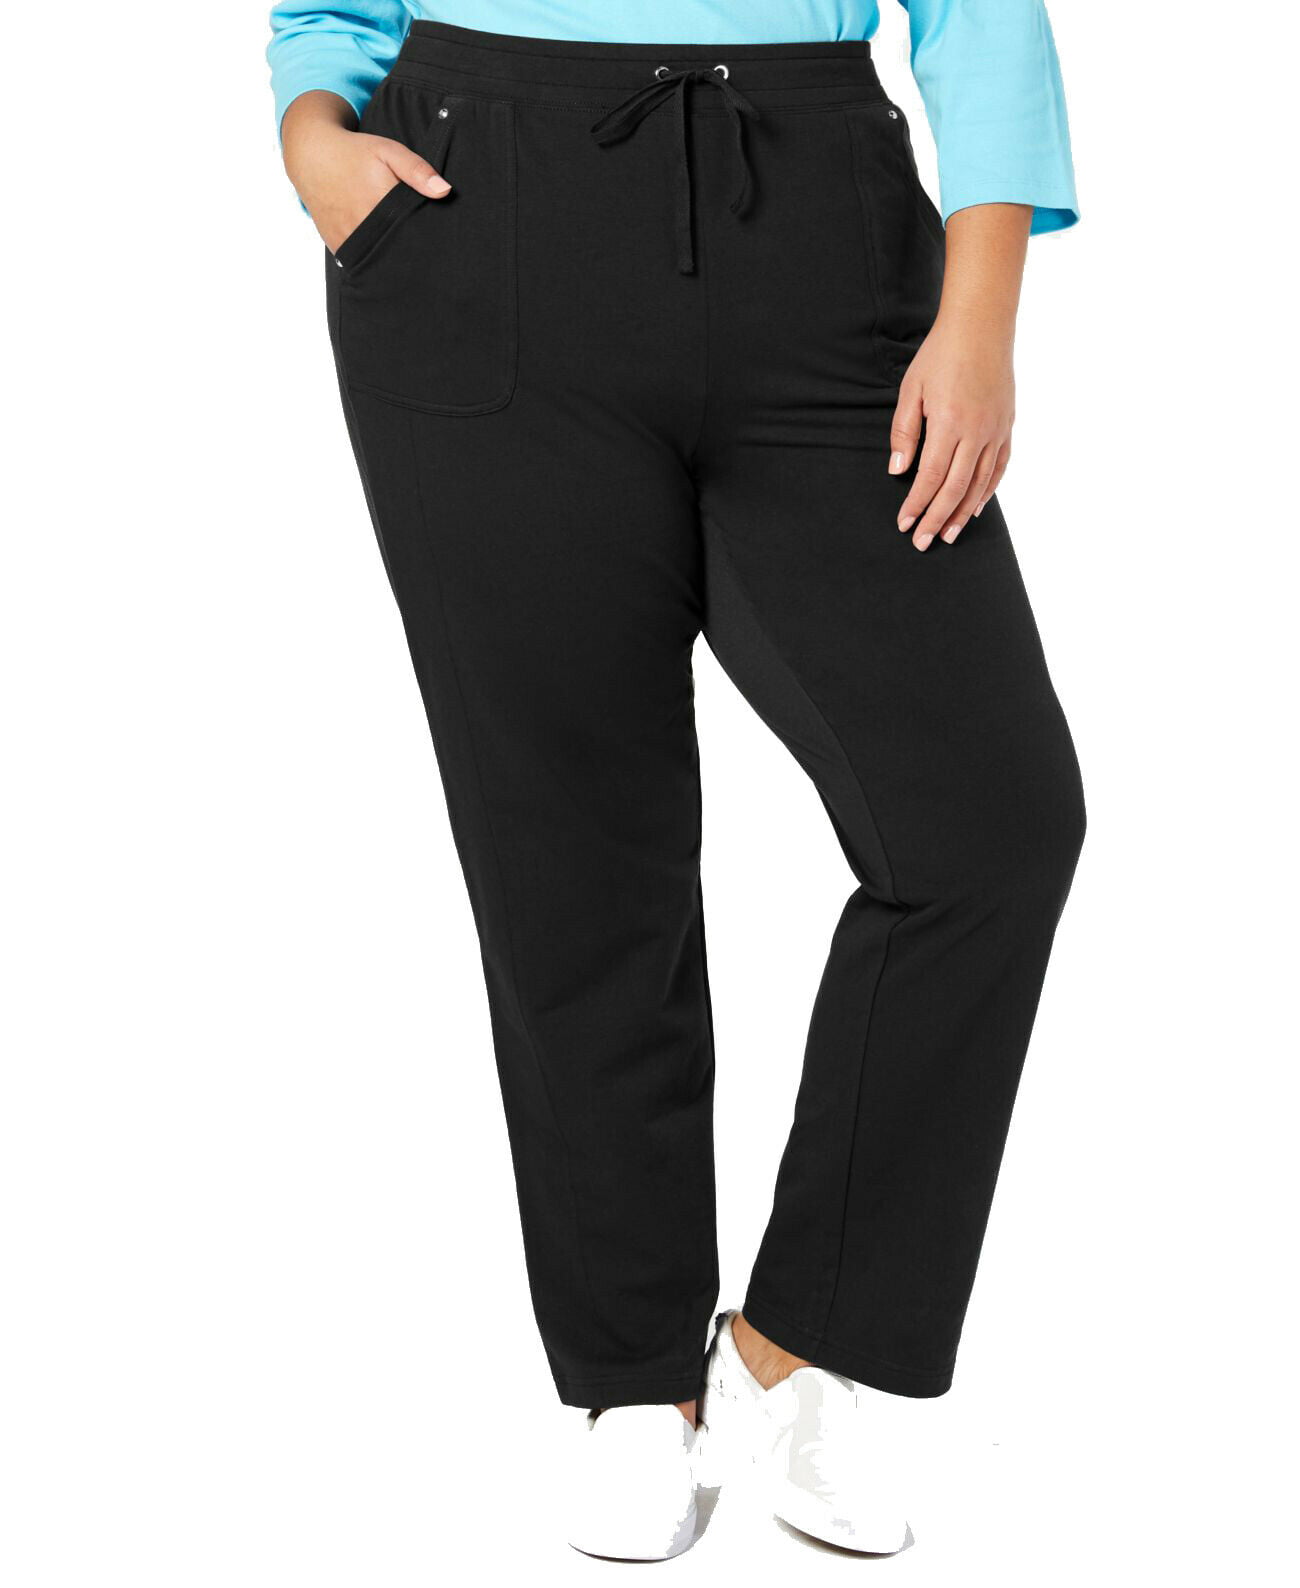 Womens Pants Black Plus Drawstring Pocket Stretch $54 1X - Walmart.com